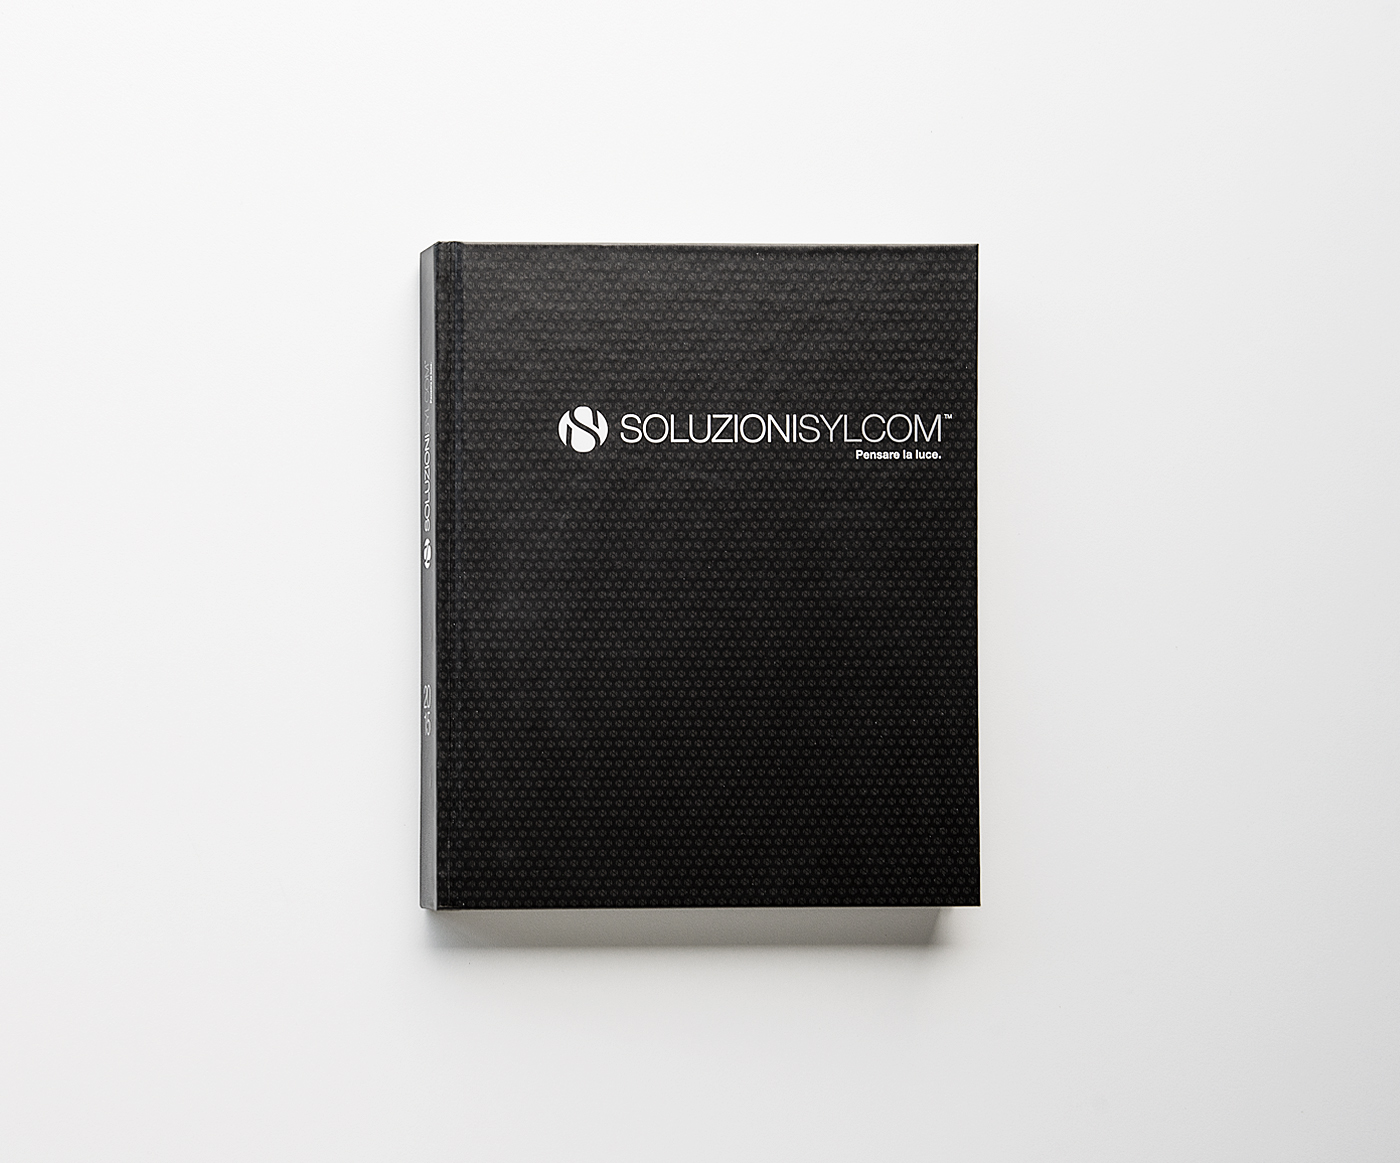 SYLCOM - Catalogue Soluzioni